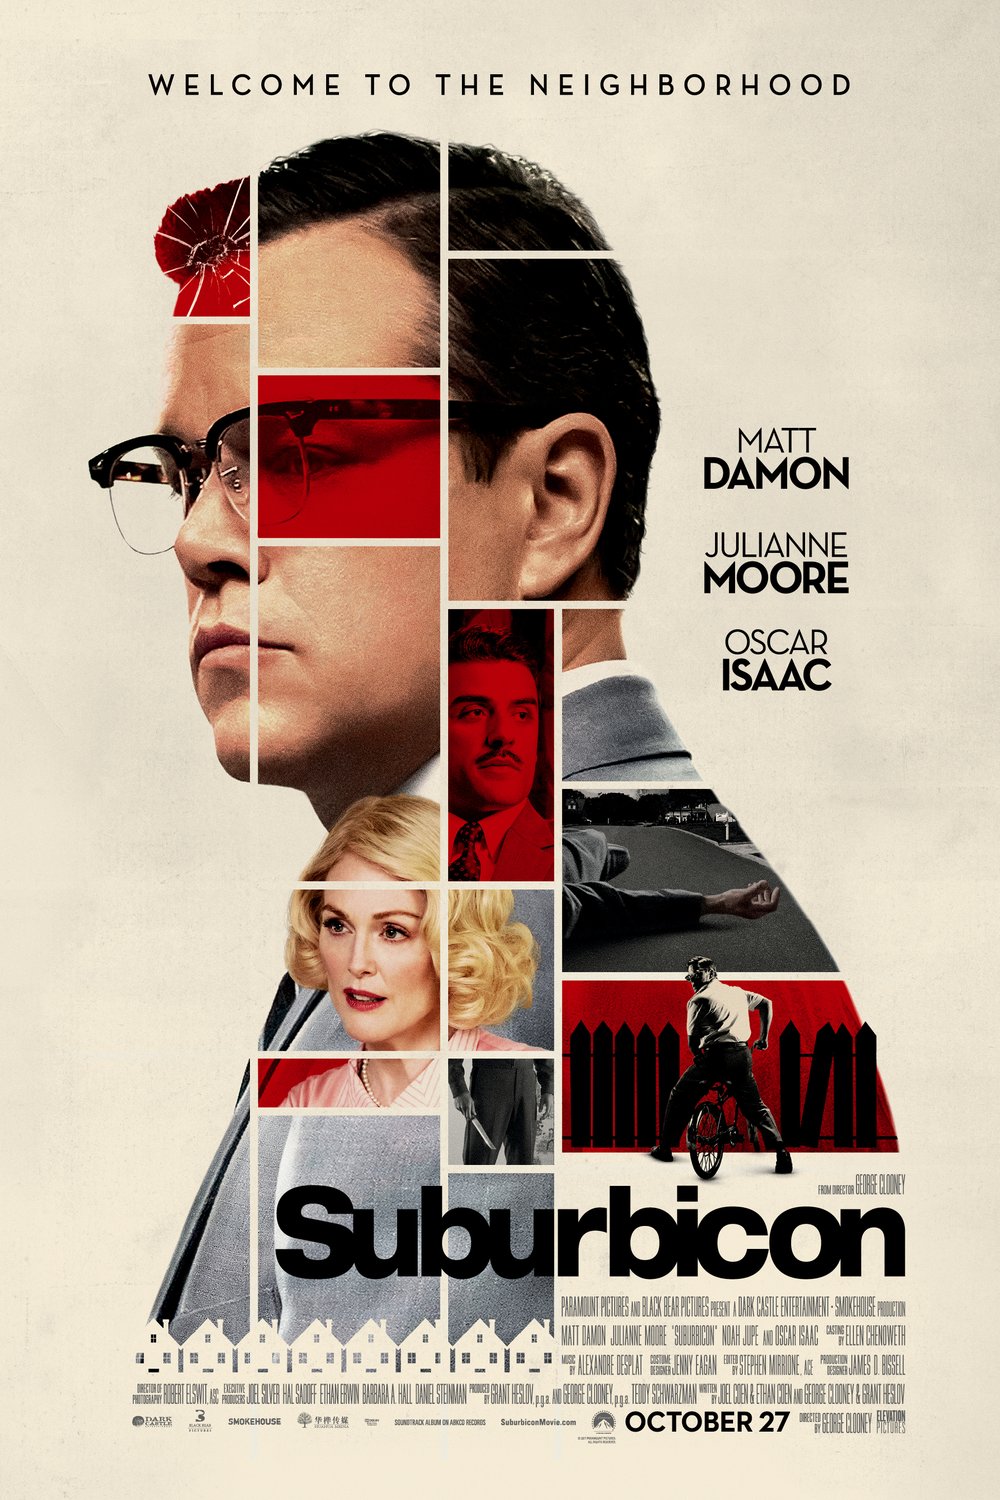 Poster of the movie Suburbicon